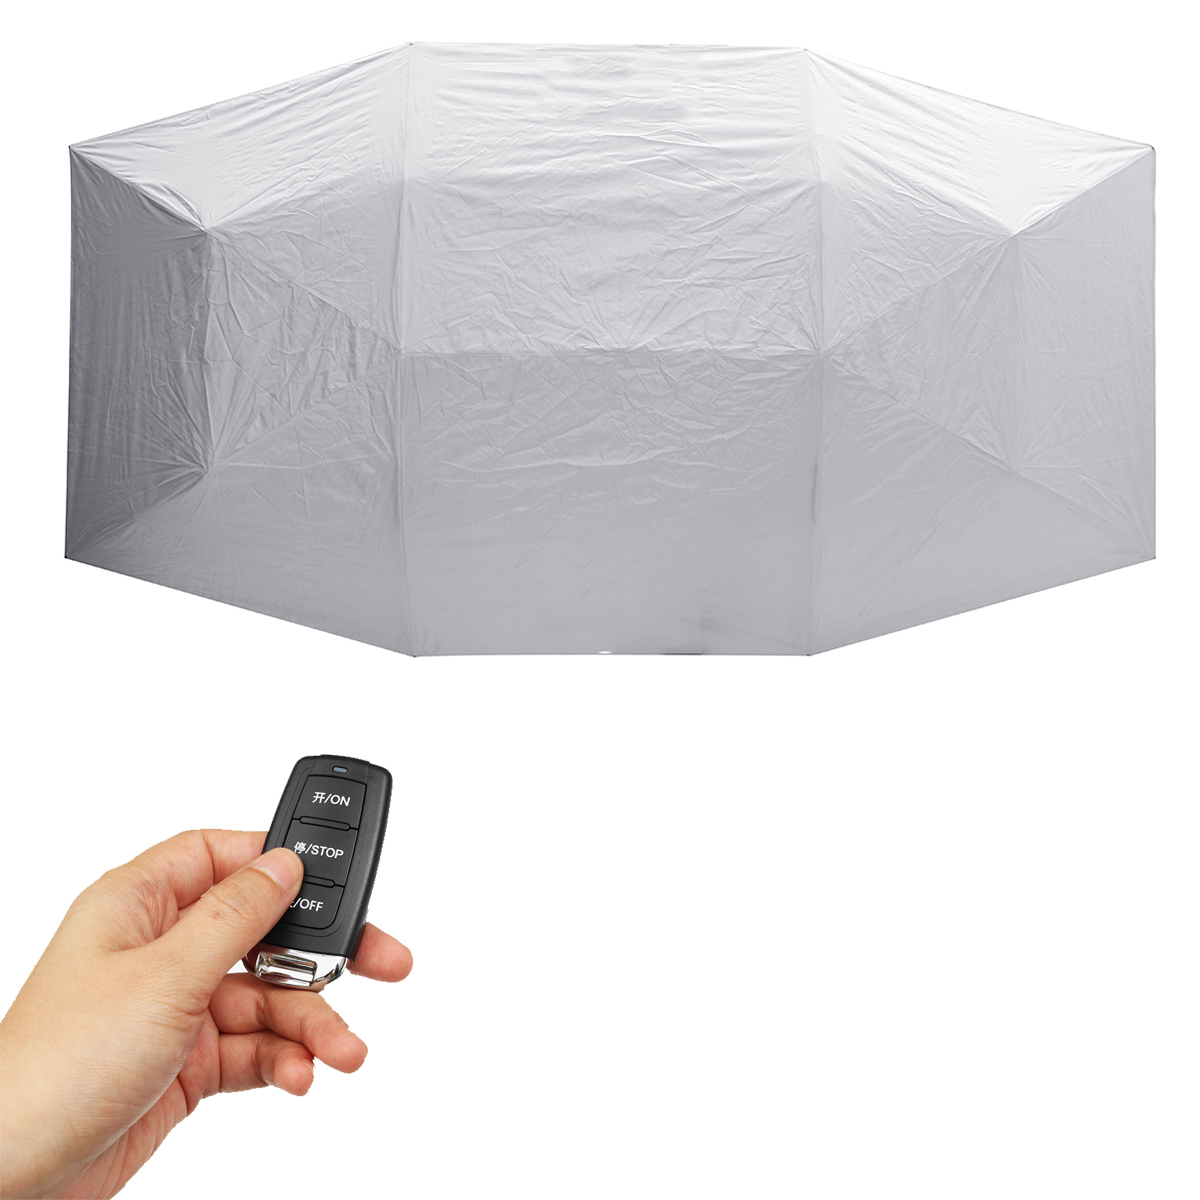 Portable Full Automatic Car Umbrella